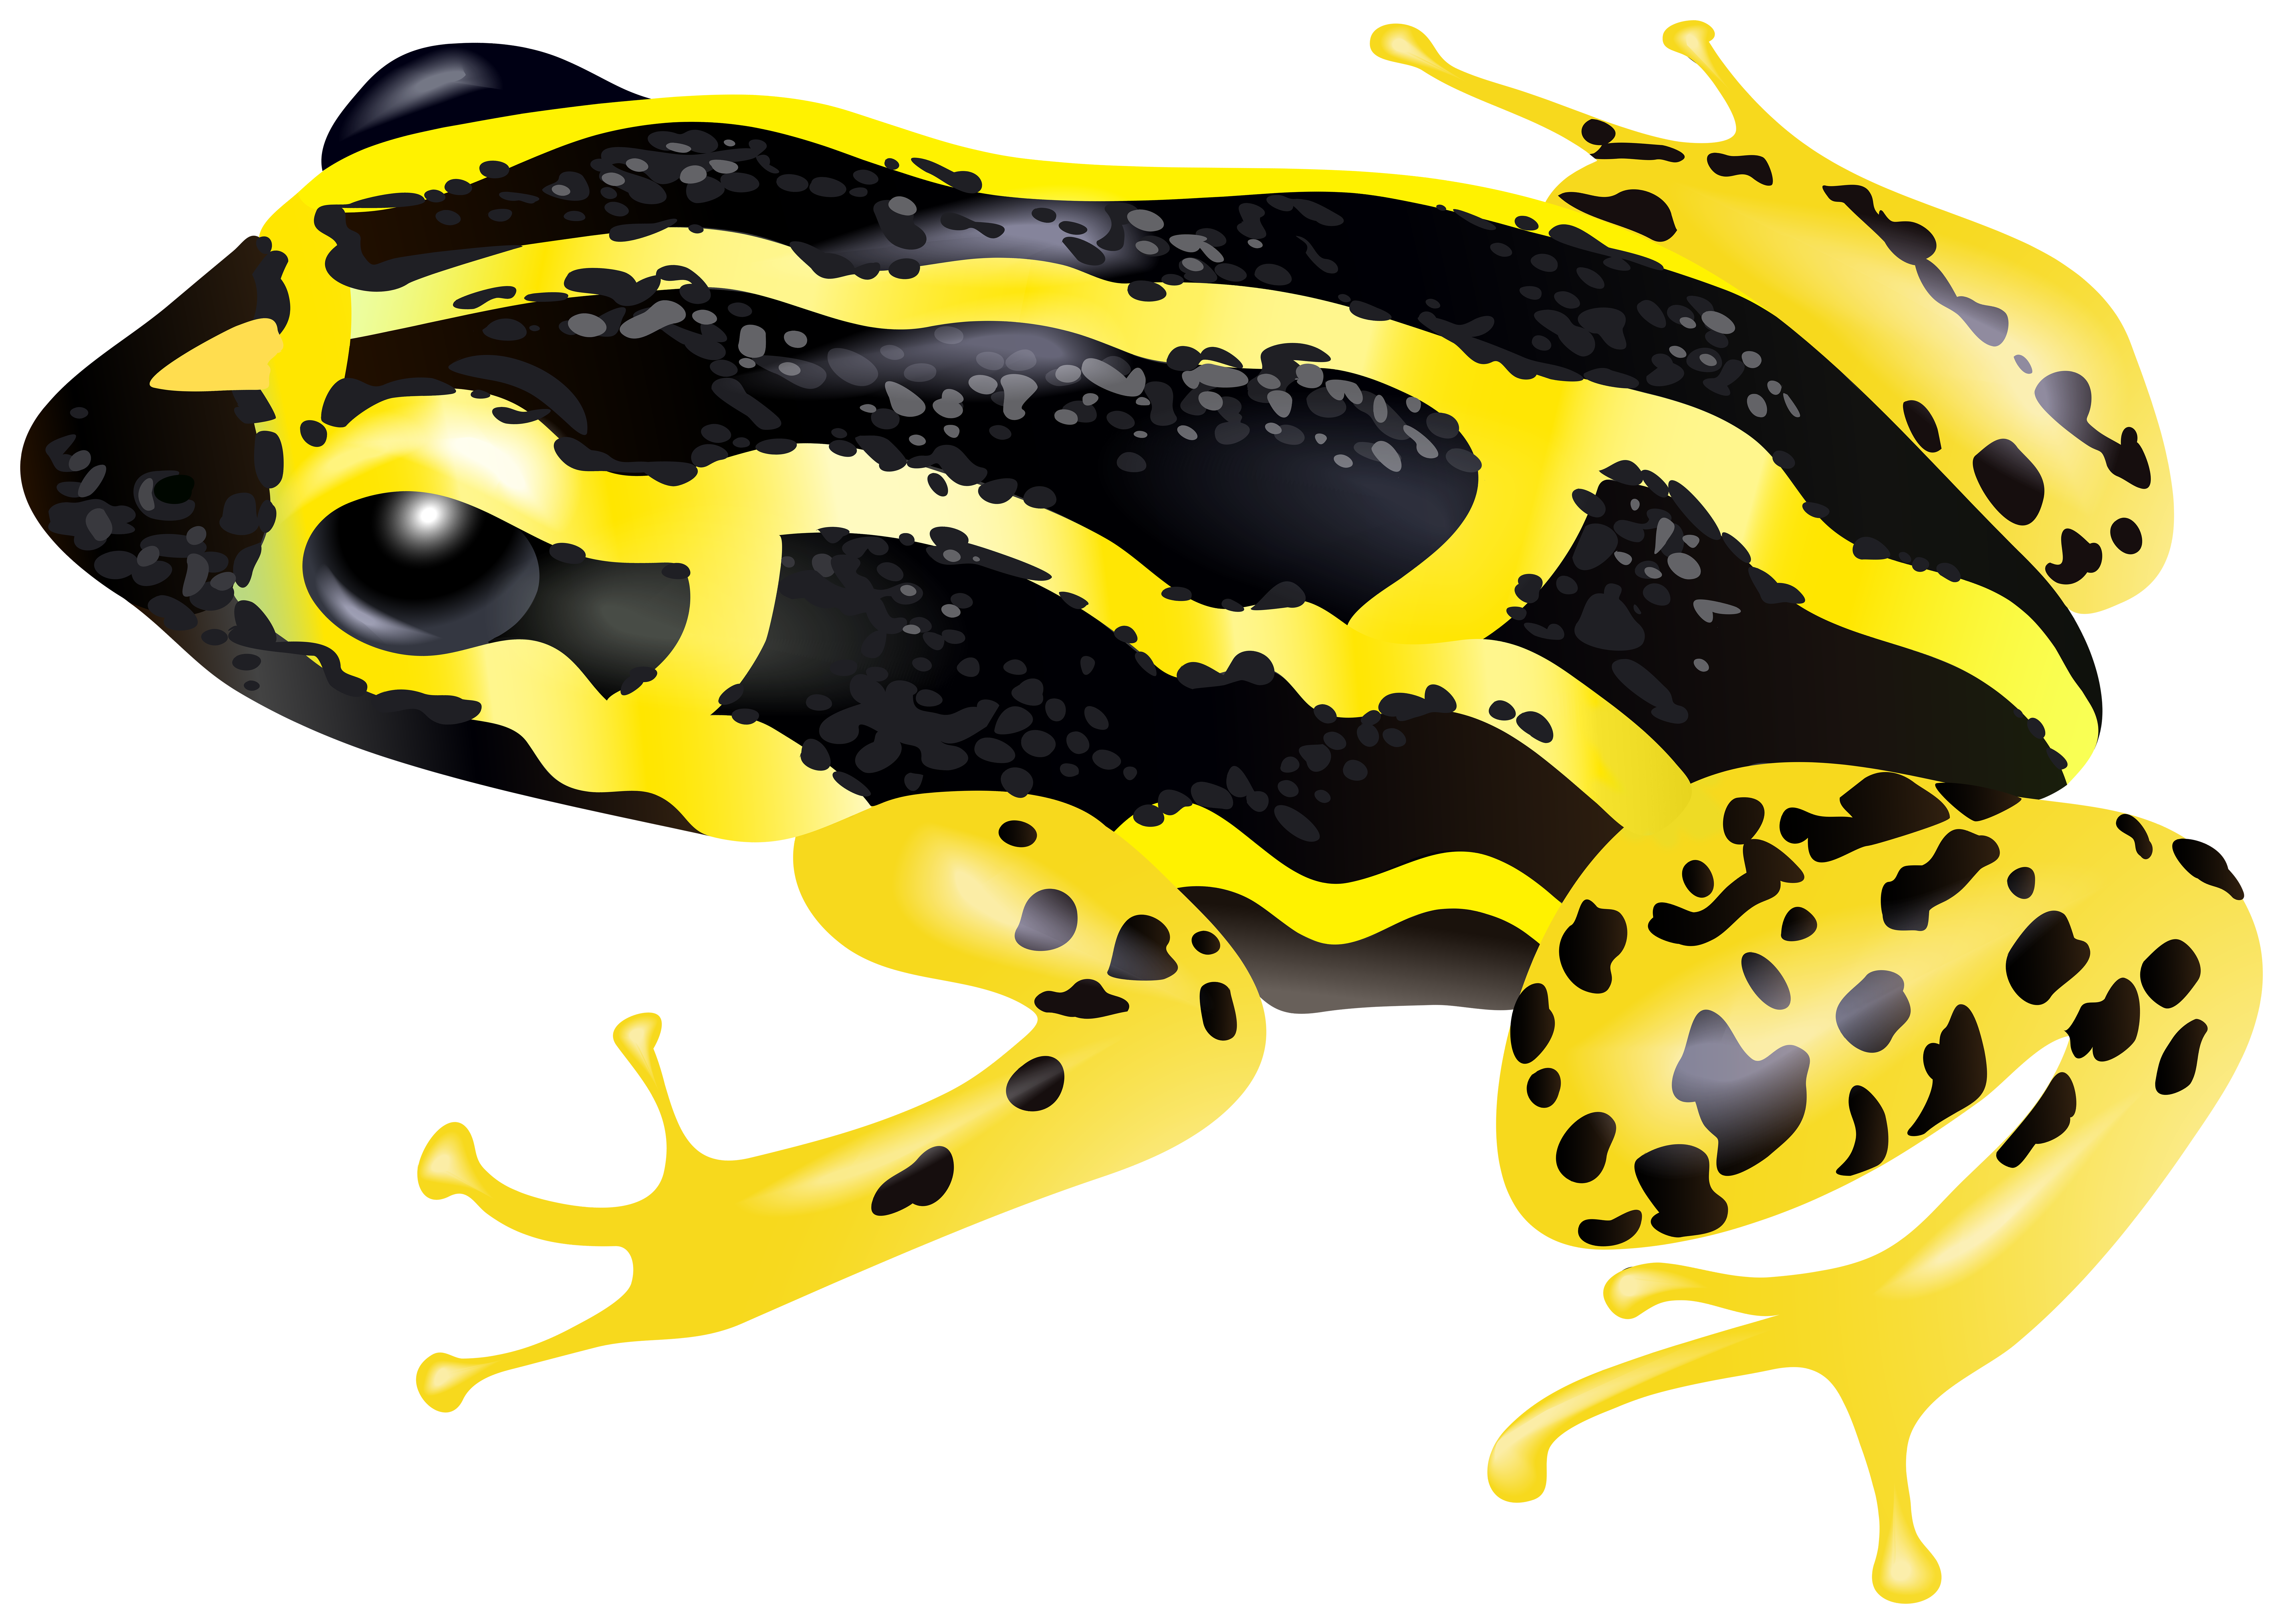 yellow frog cartoon